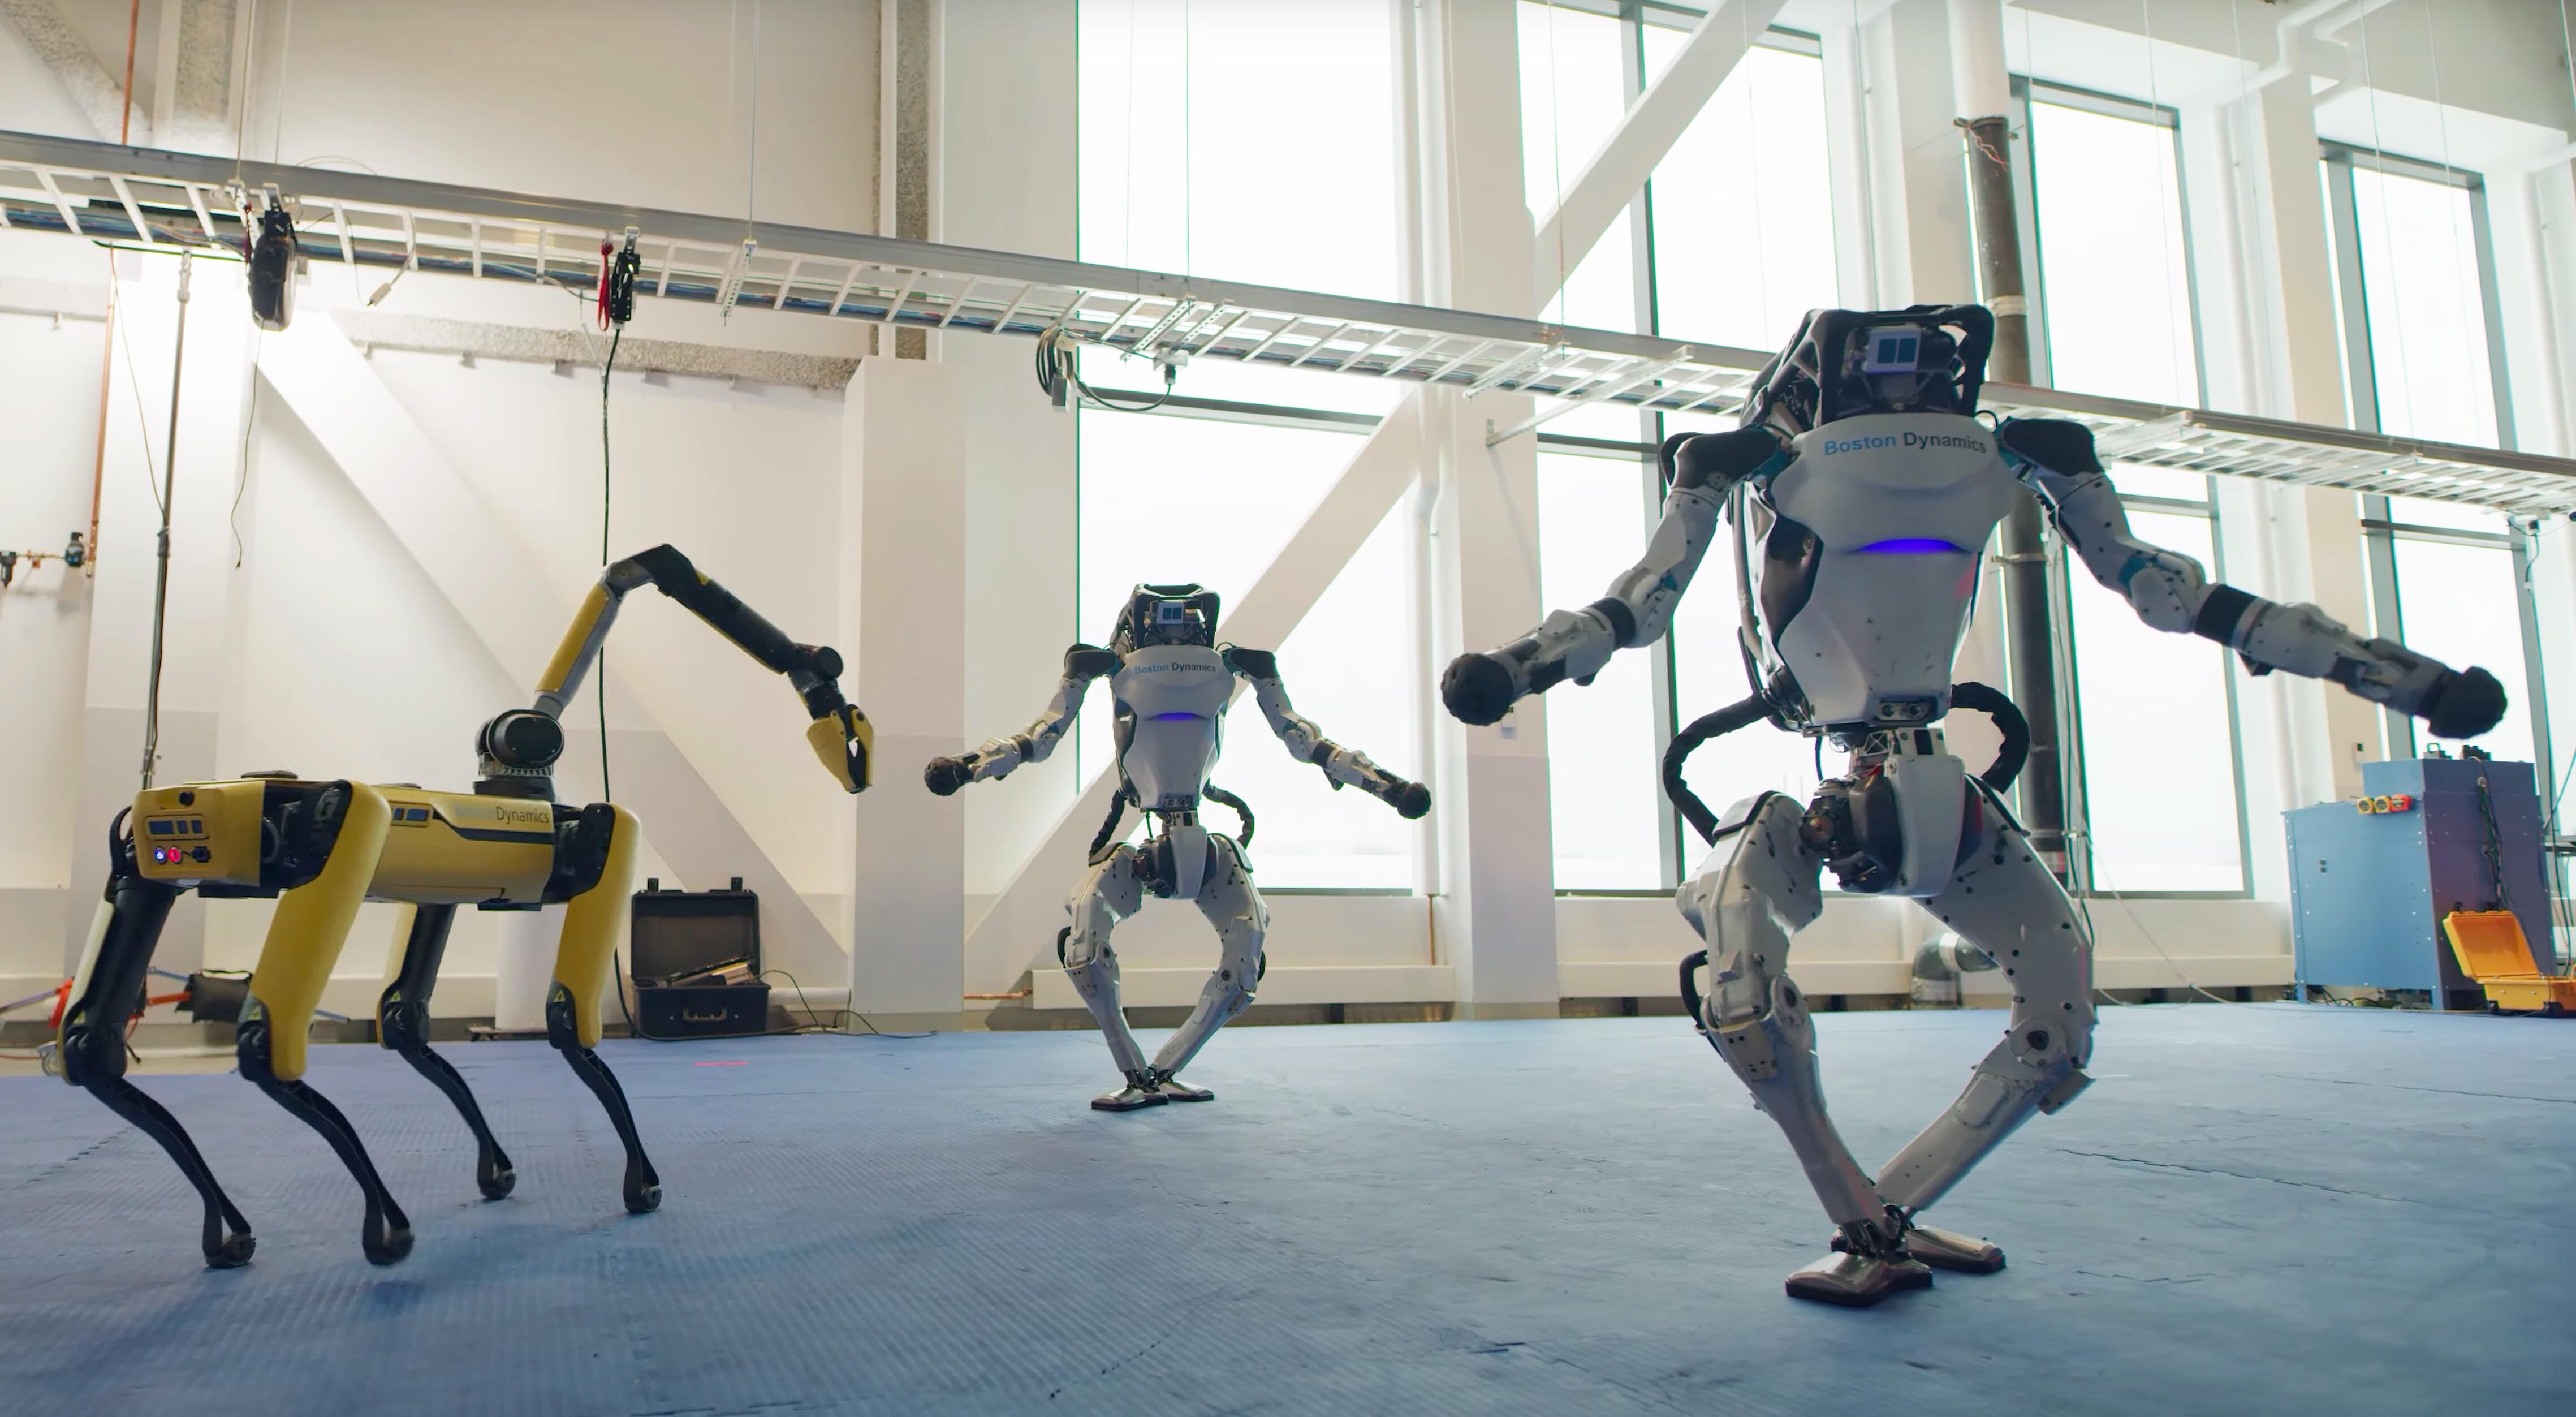 Танец роботов на играх будущего. Робот Бостон Динамикс. Атлас робот Boston Dynamics. Робототехника Бостон Динамикс. Роботы Бостон Динамикс танцуют.